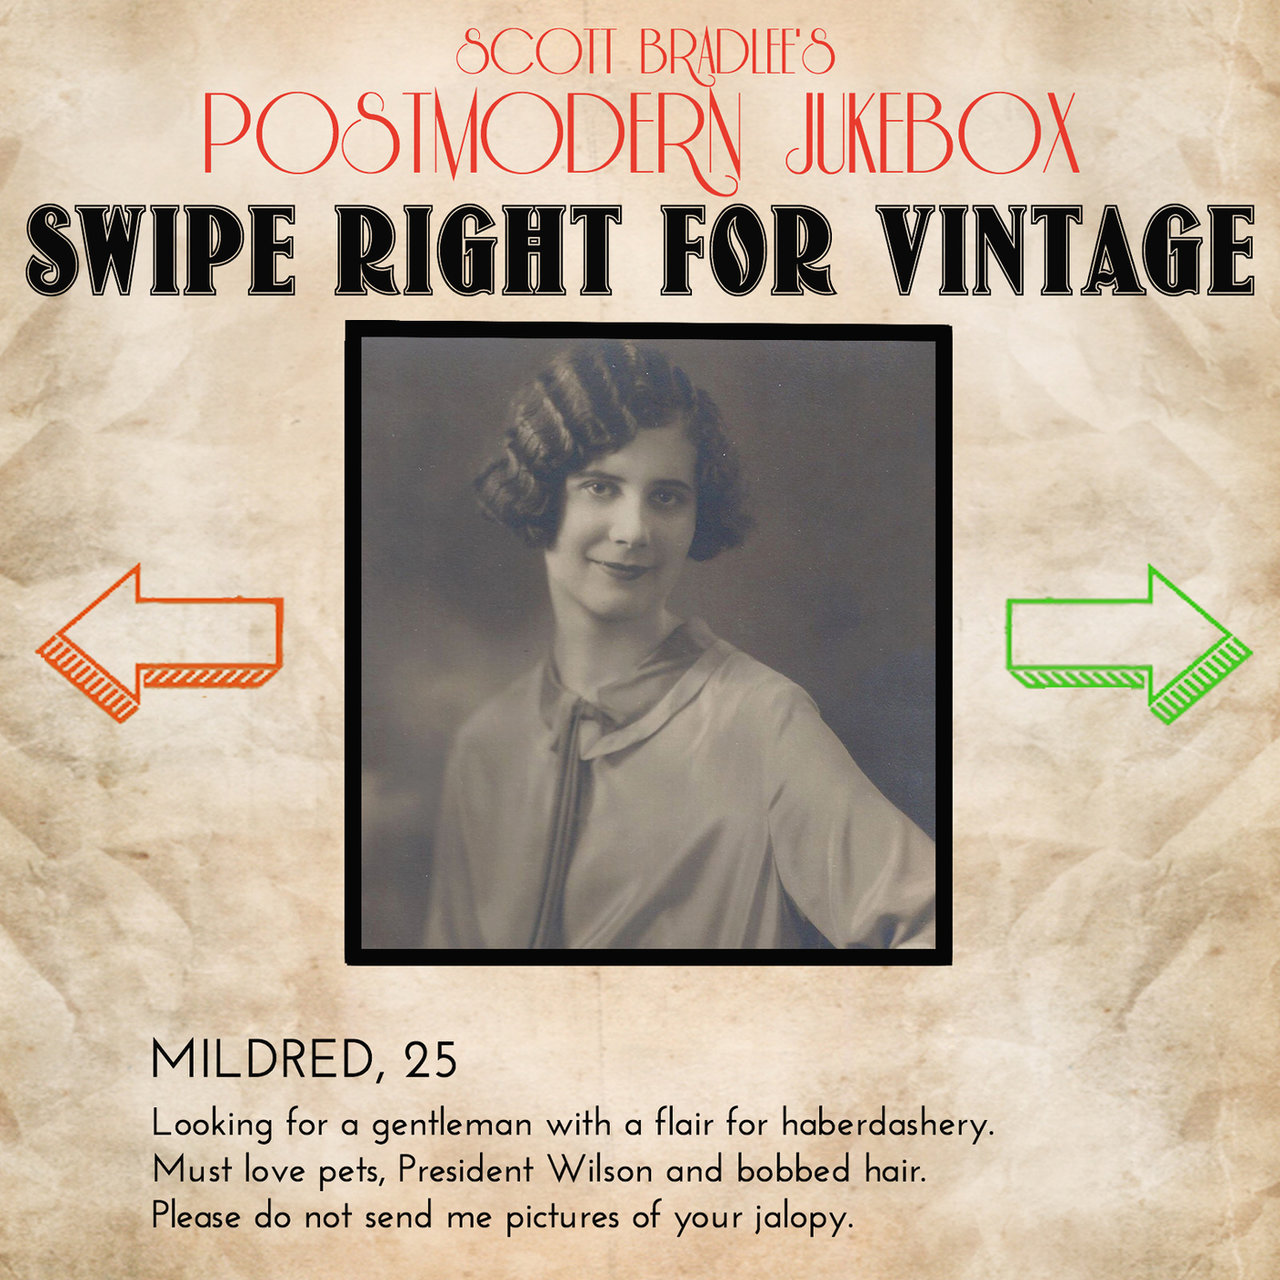 Postmodern Jukebox Swipe Right For Vintage cover artwork